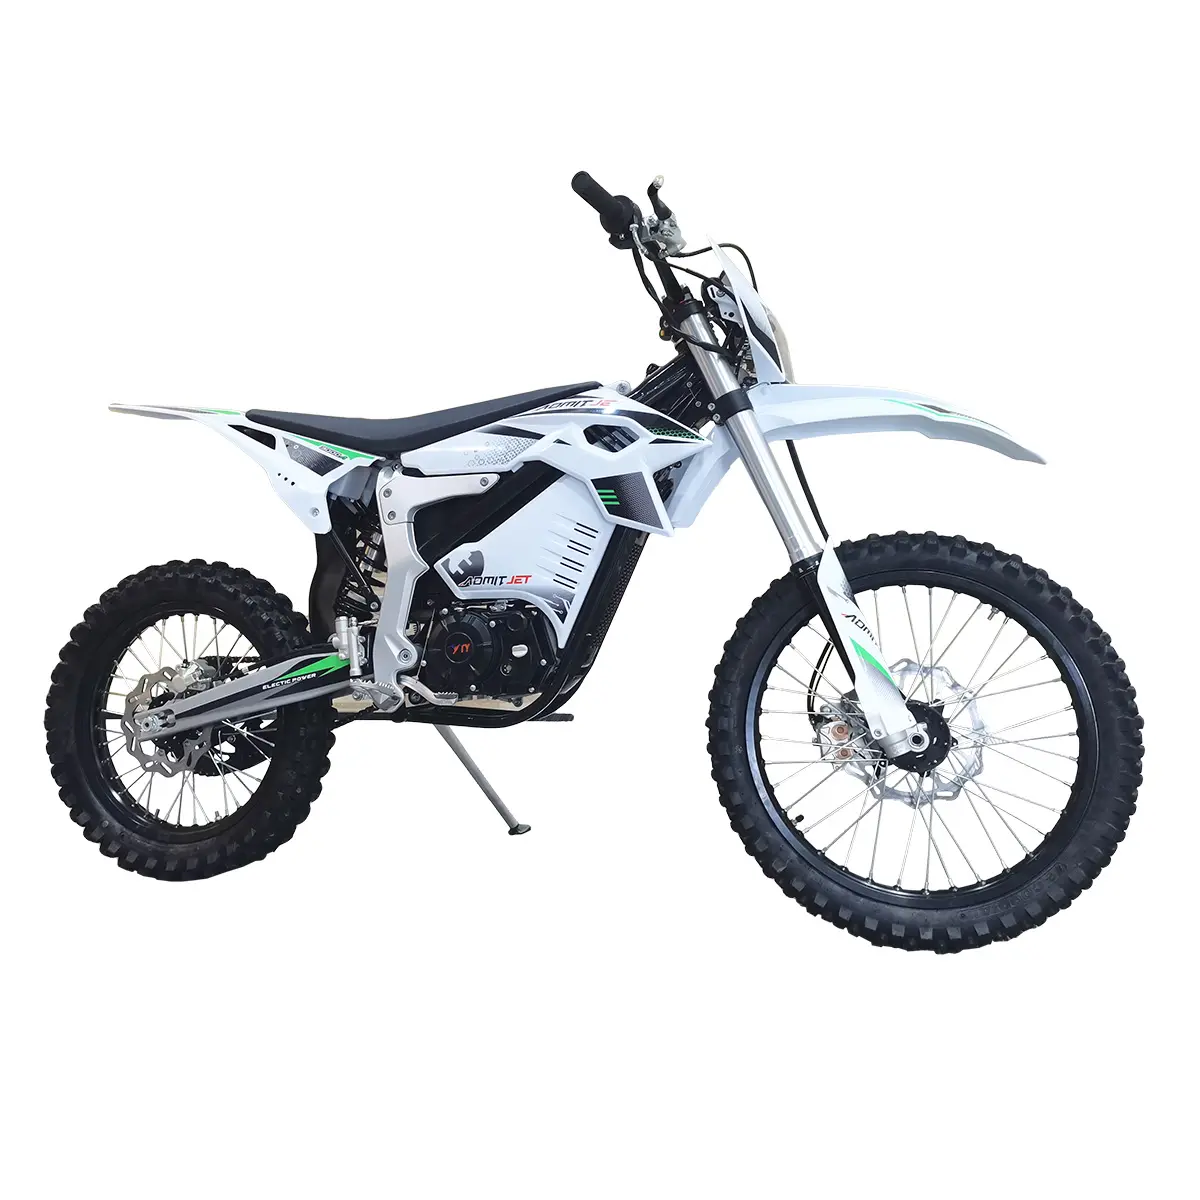 12000W Motor High Speed 120KM/H Long Range Adult 72V Heavy Bike Racing Fast Moto Elettrica/Eletrica Electric Motorcycle